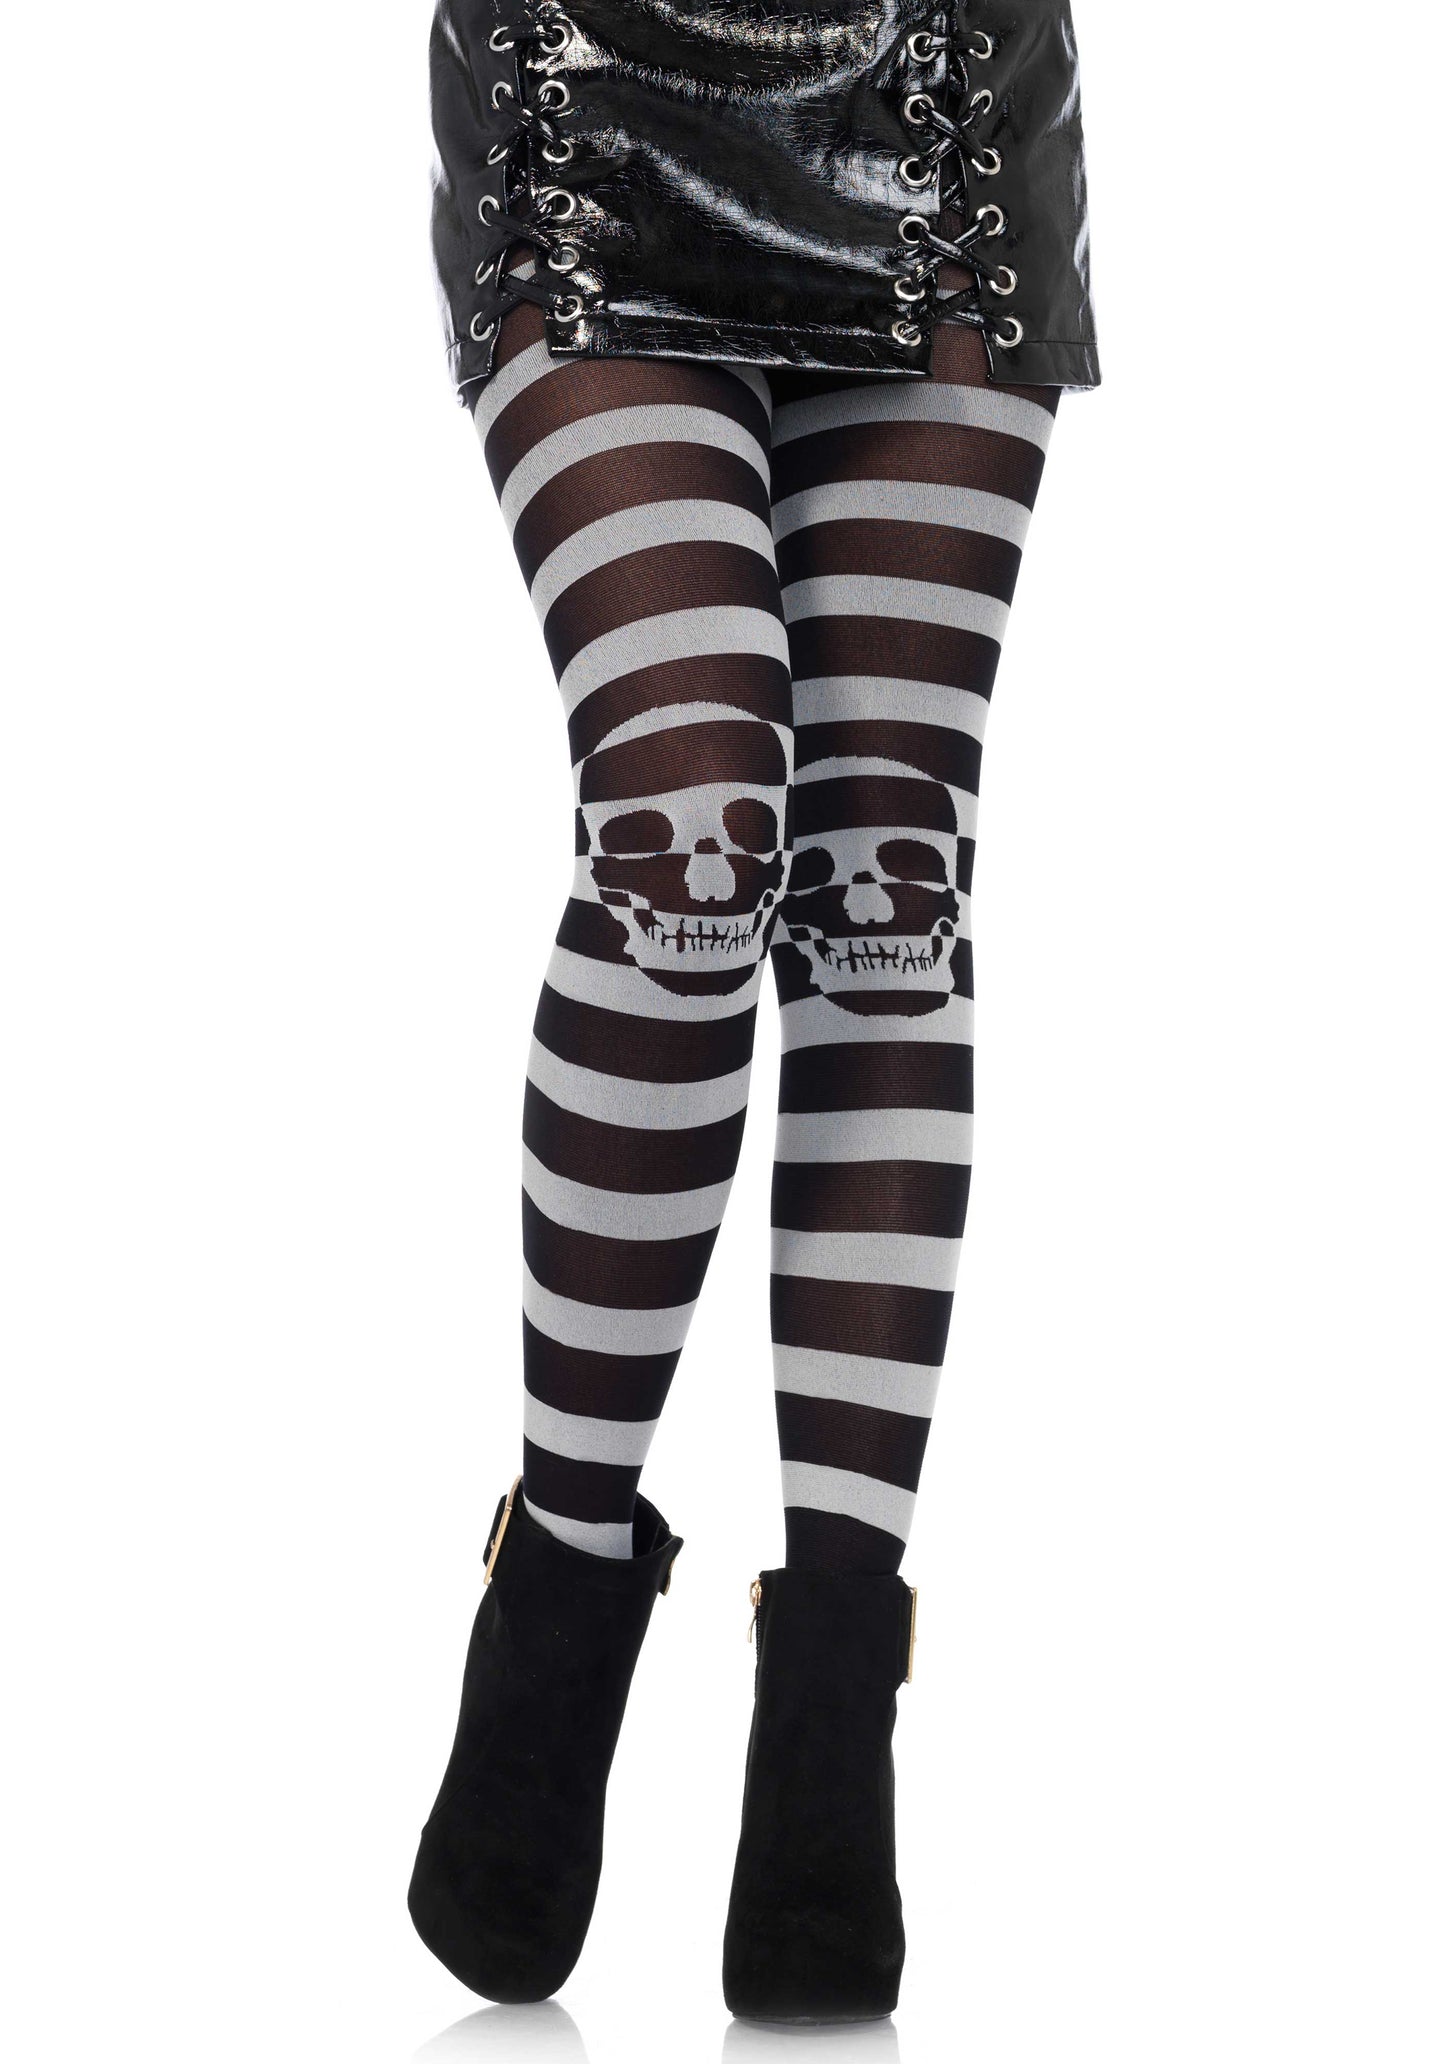 Leg Avenue 7131 Striped skull pantyhose - grey and black striped tights